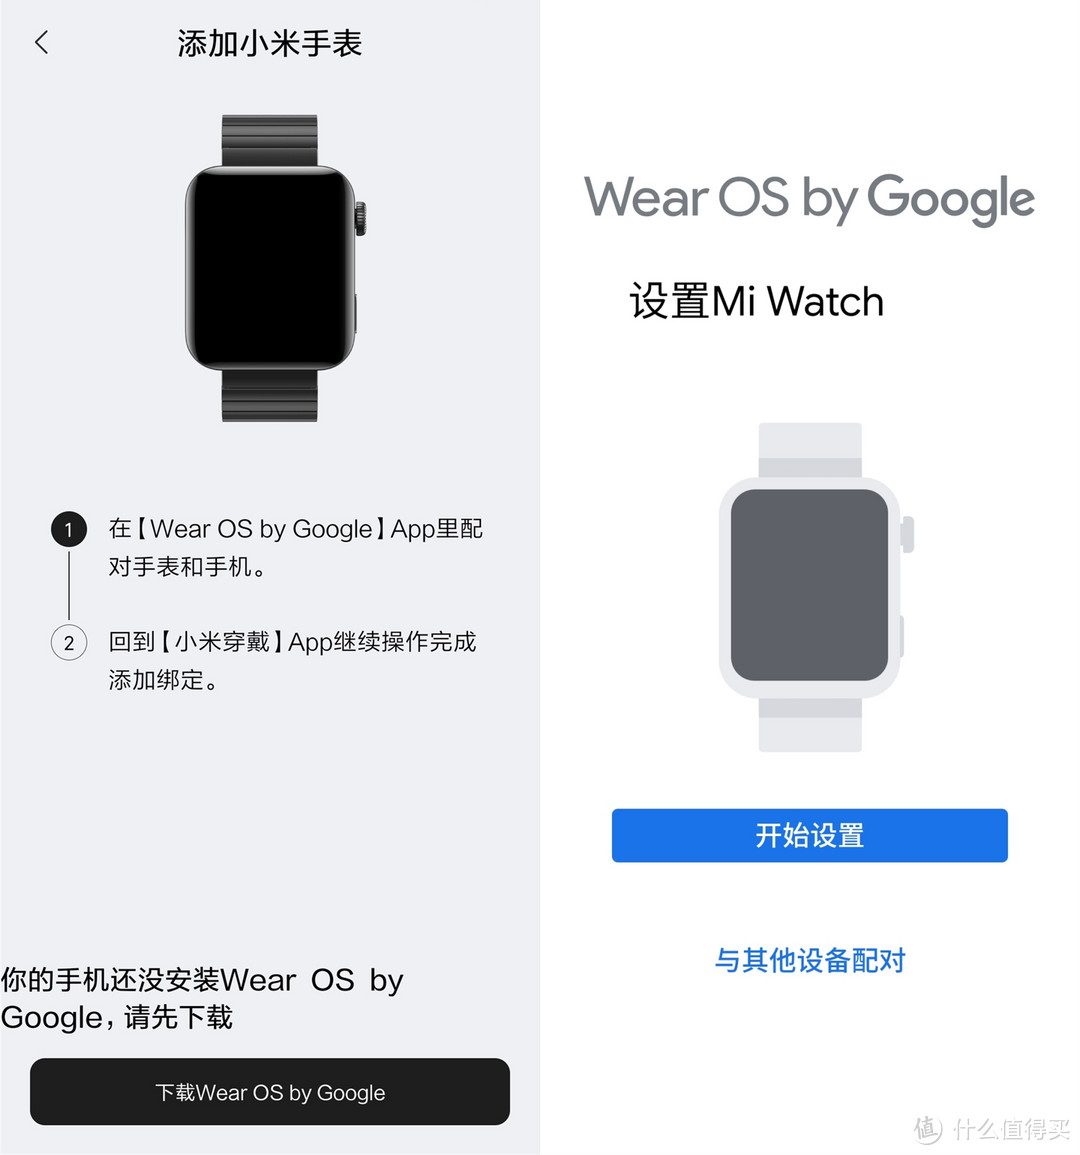 就算依靠MIUI For Watch也无法拯救Android Wear OS，Mi Watcht使用体验